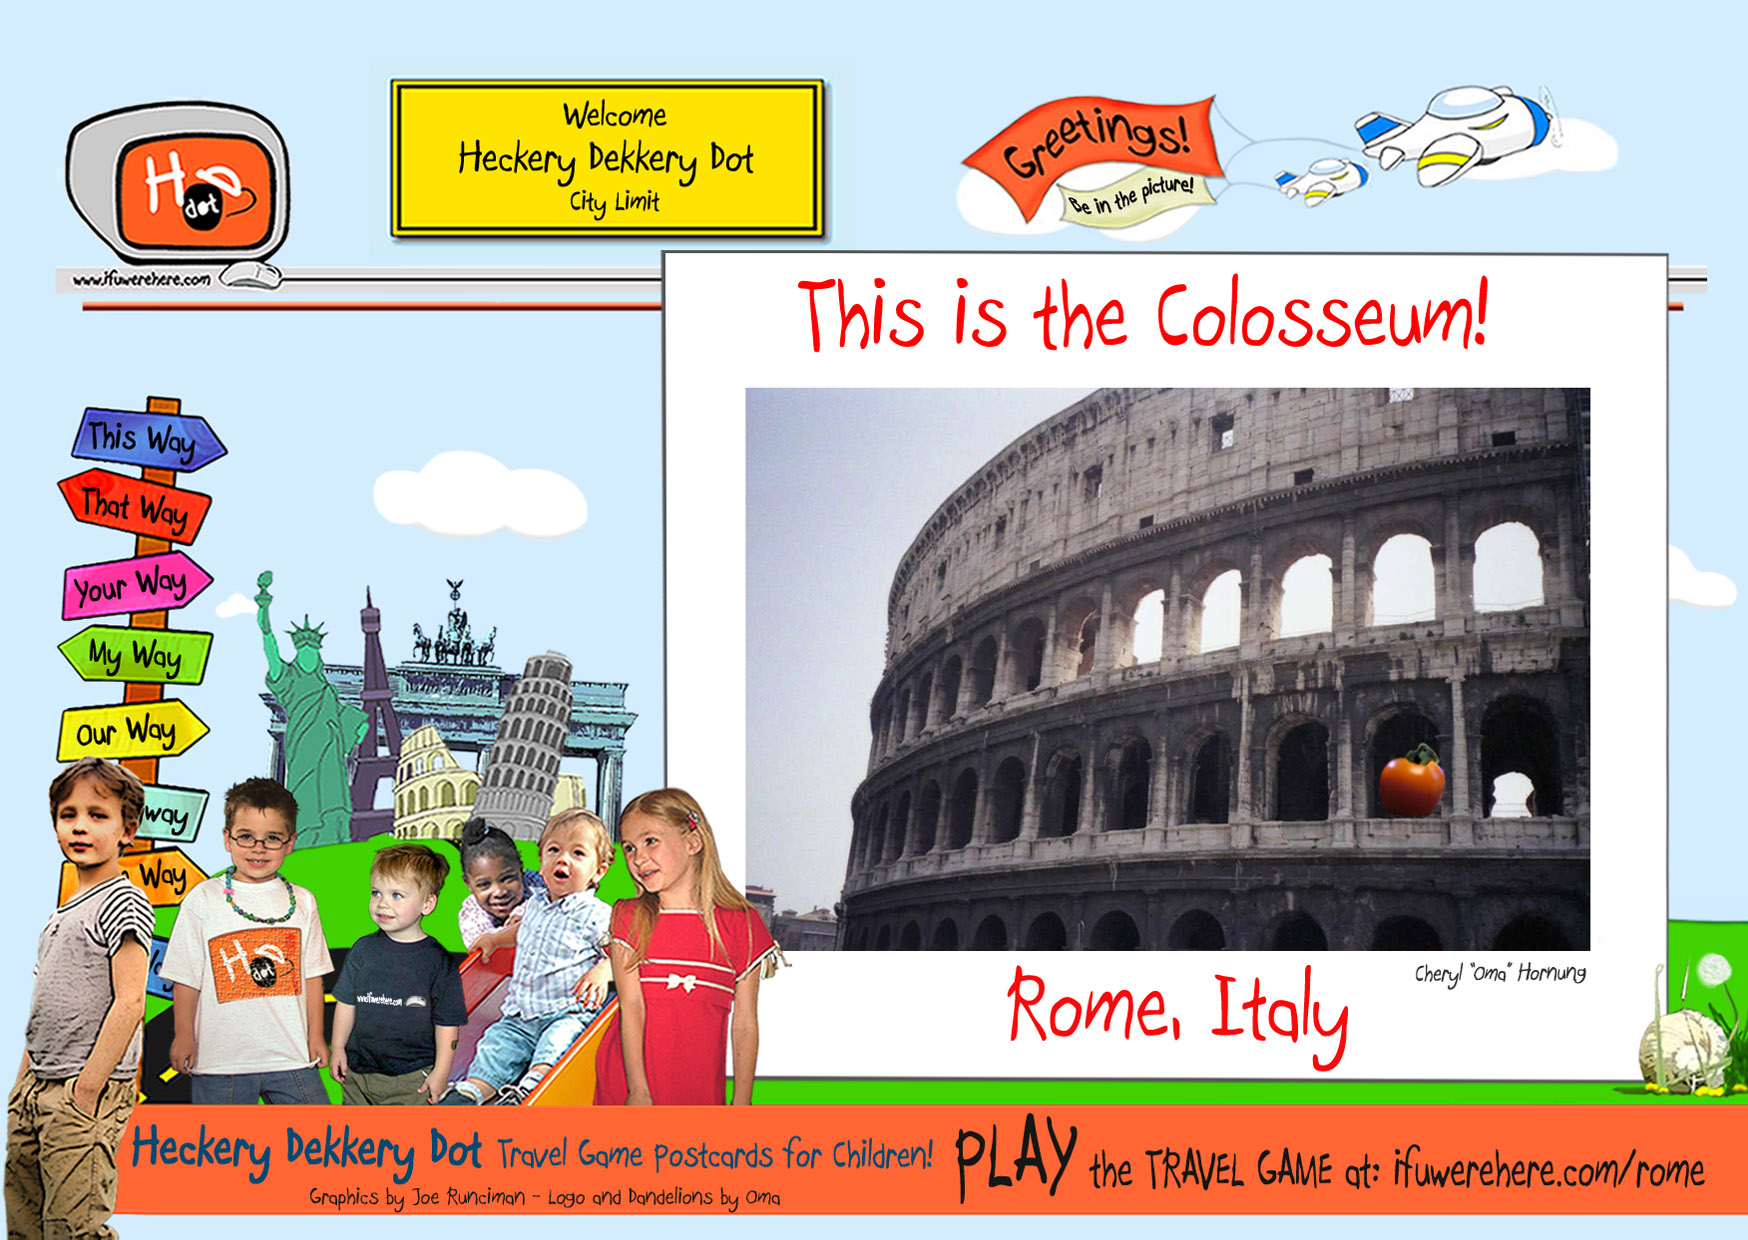 (1) The Colosseum